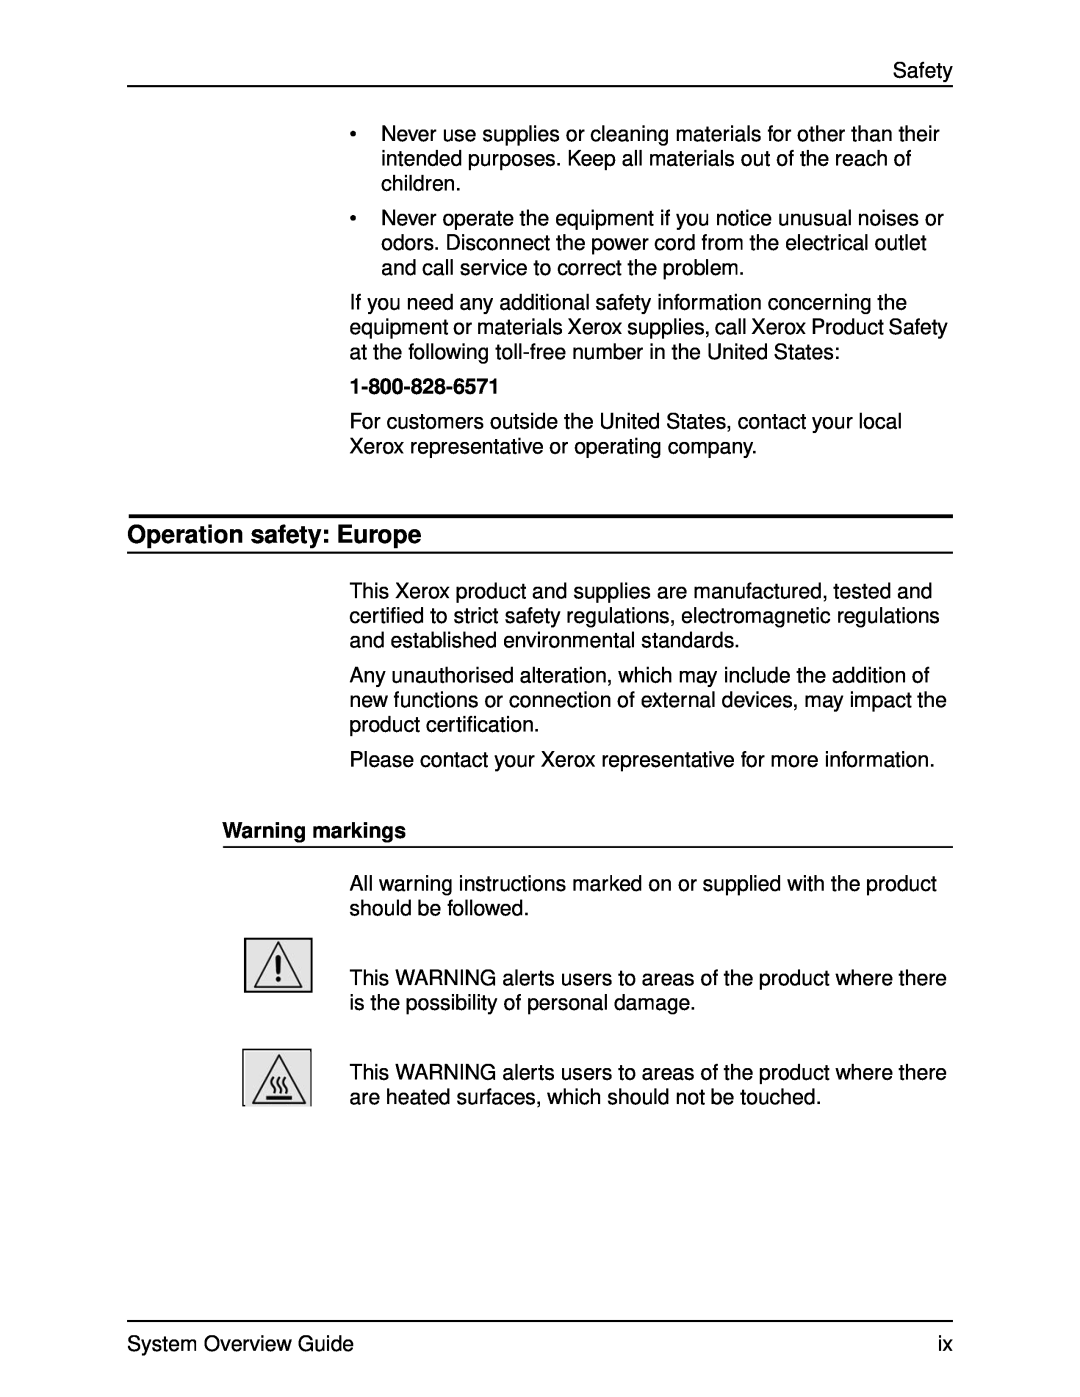 Xerox 92C, IPS, NPS, 4890, 4850 manual Operation safety Europe, Warning markings 